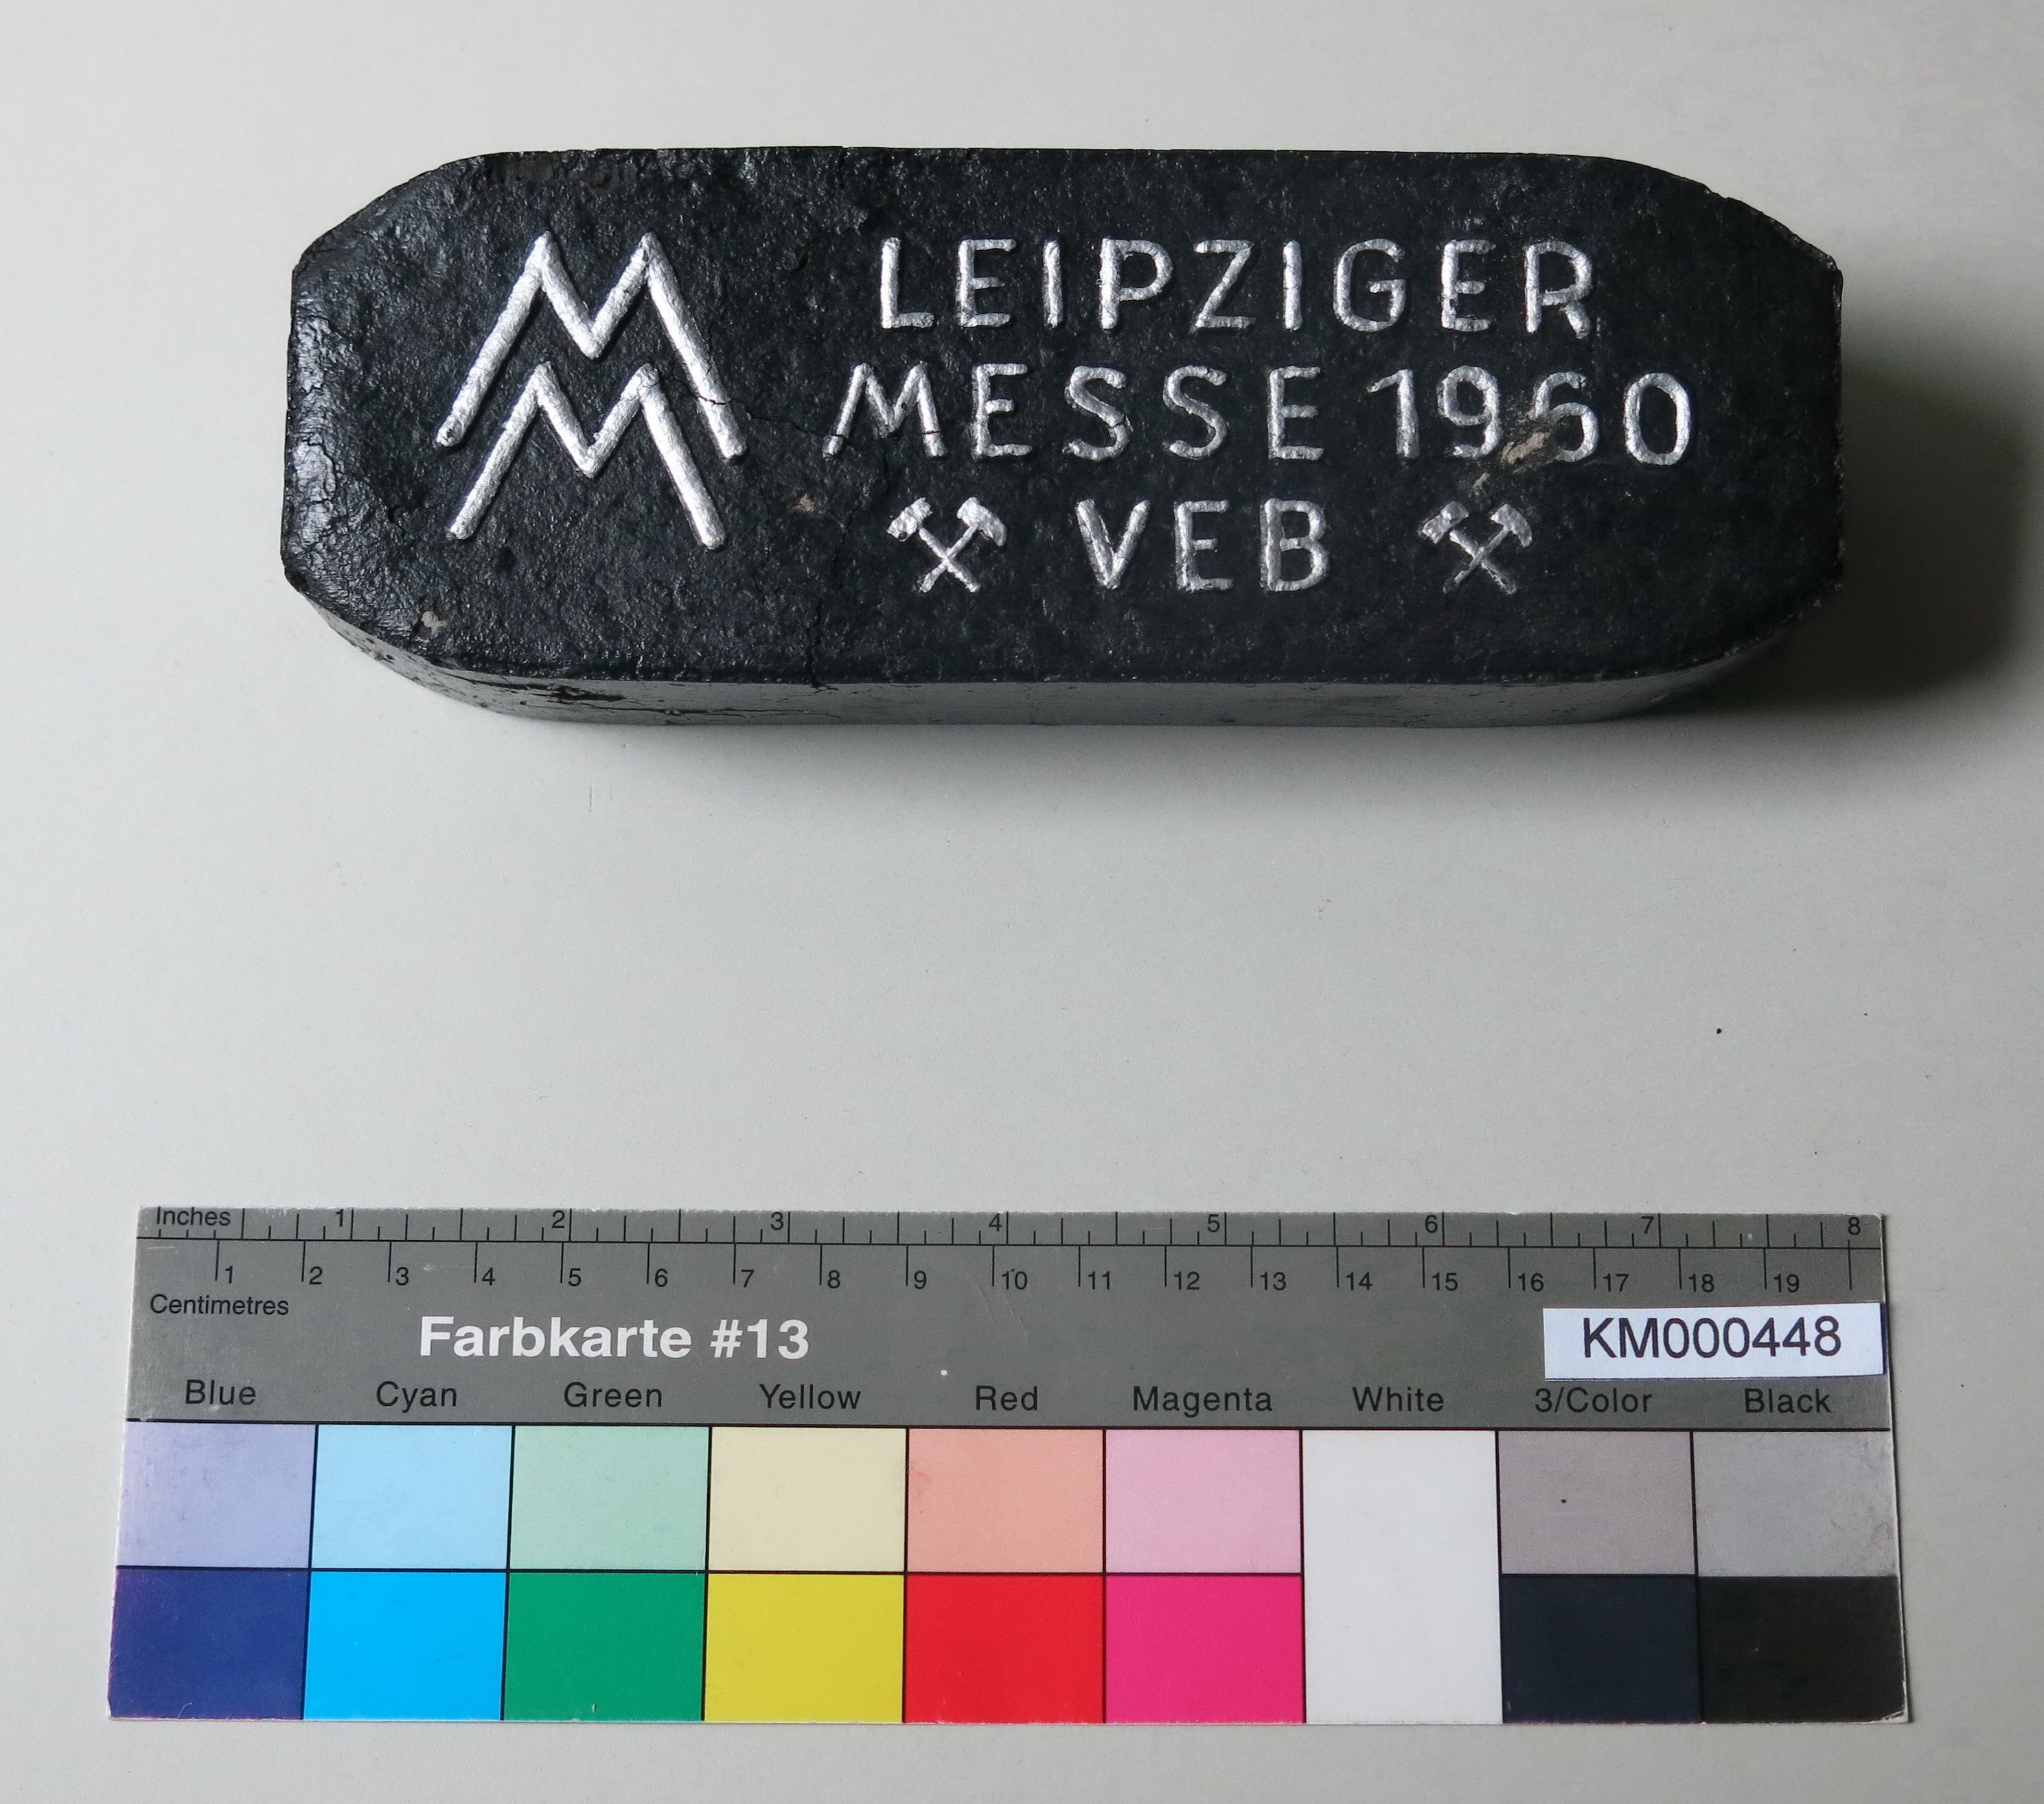 Zierbrikett " LEIPZIGER MESSE 1960 VEB" (Energiefabrik Knappenrode CC BY-SA)